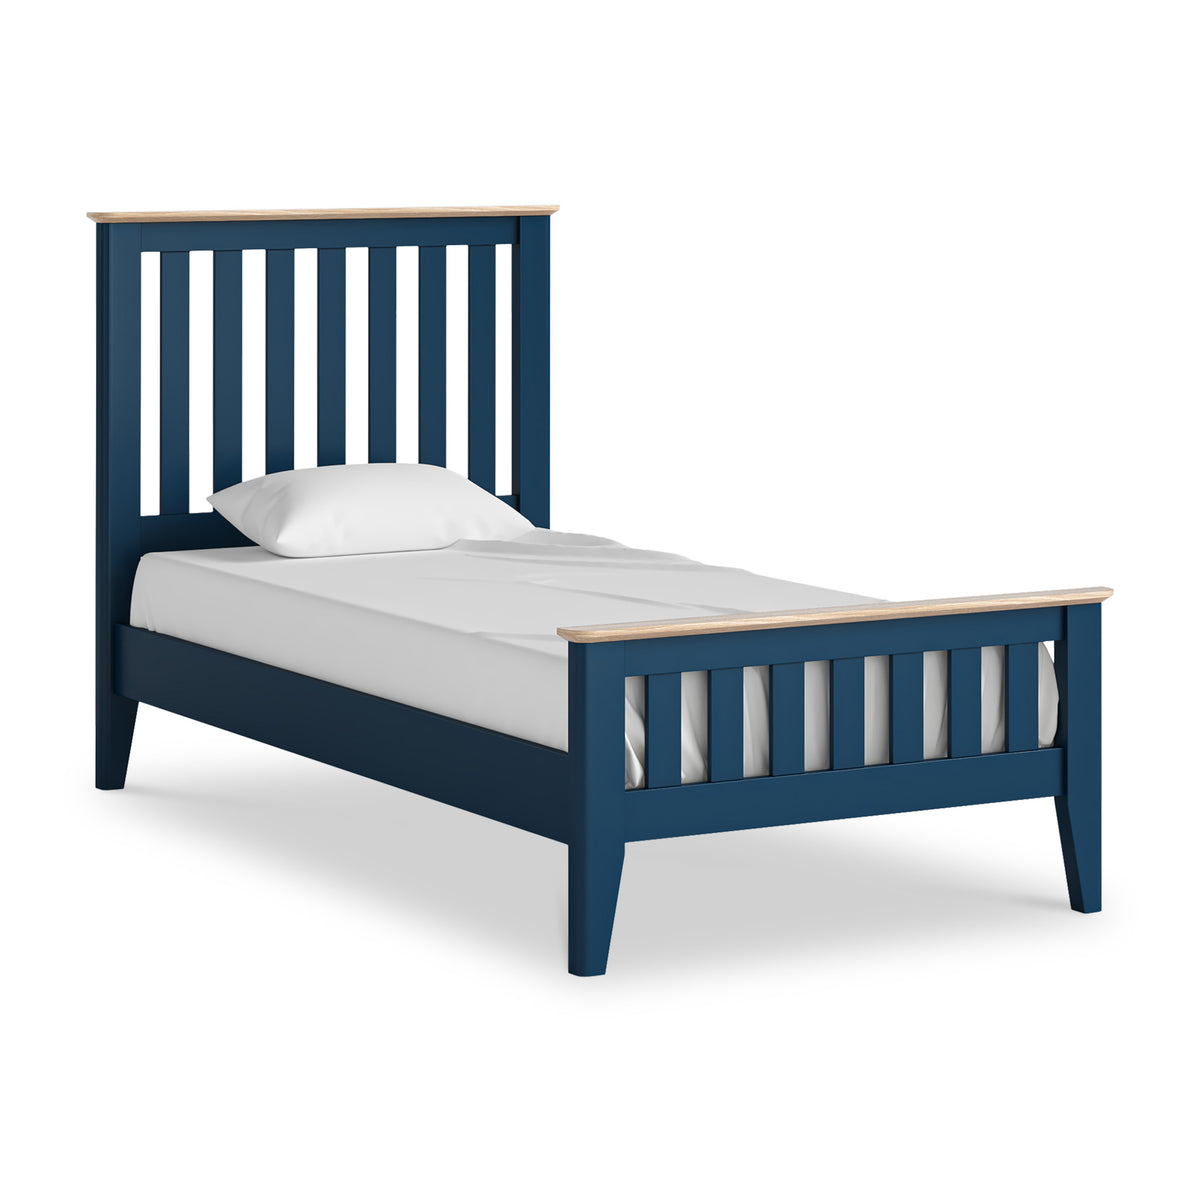 Penrose Navy Blue Single Slatted Bed from Roseland Furniture